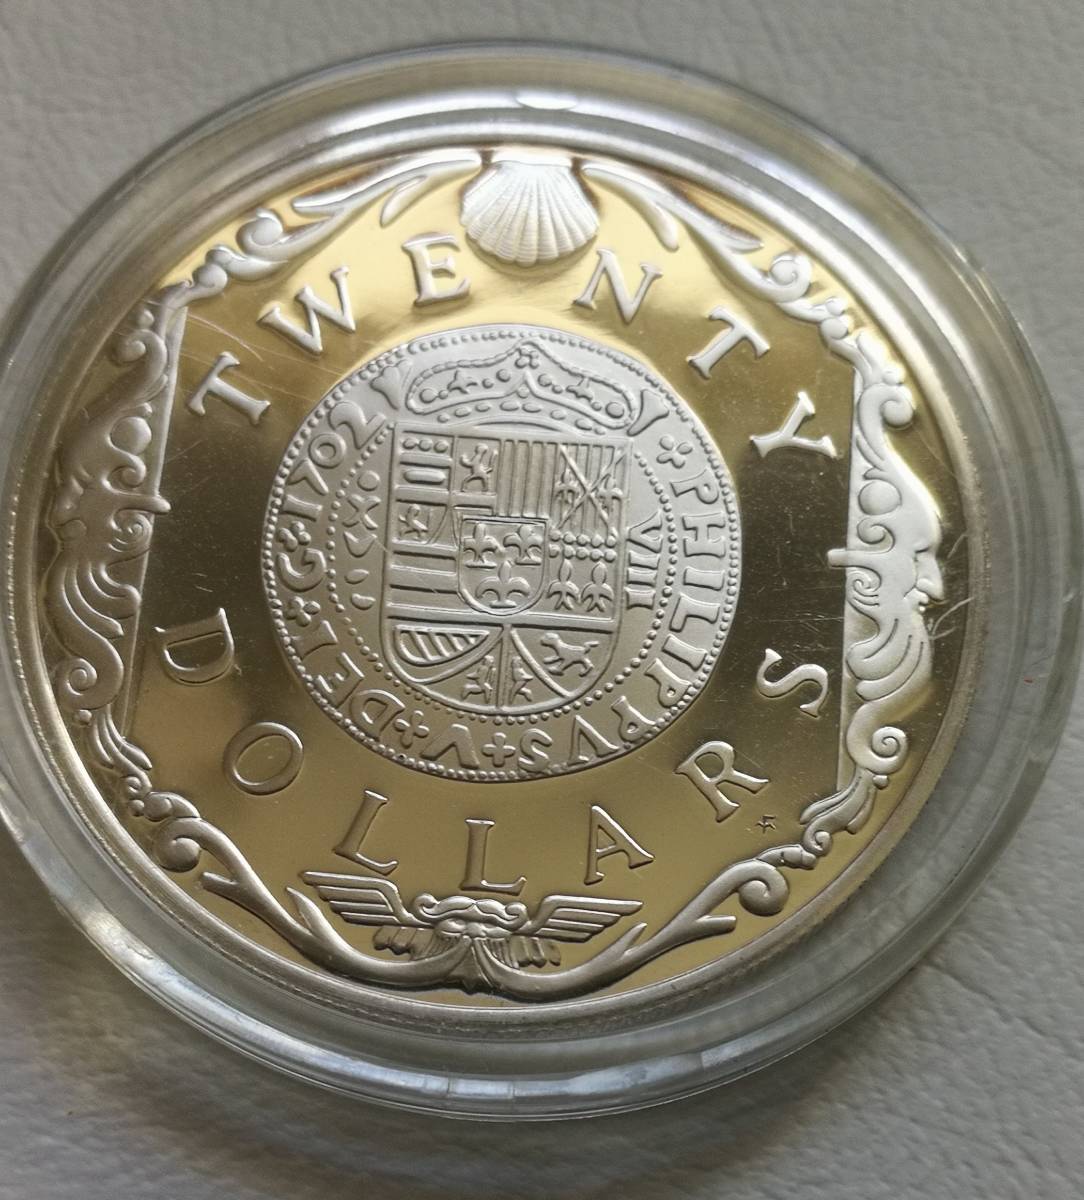 ELIZABETH THE SECOND イギリス領バージン諸島 20ドル銀貨 1985年 エリザベス2世 TWENTY DOLLARS 重量19.1g_画像2